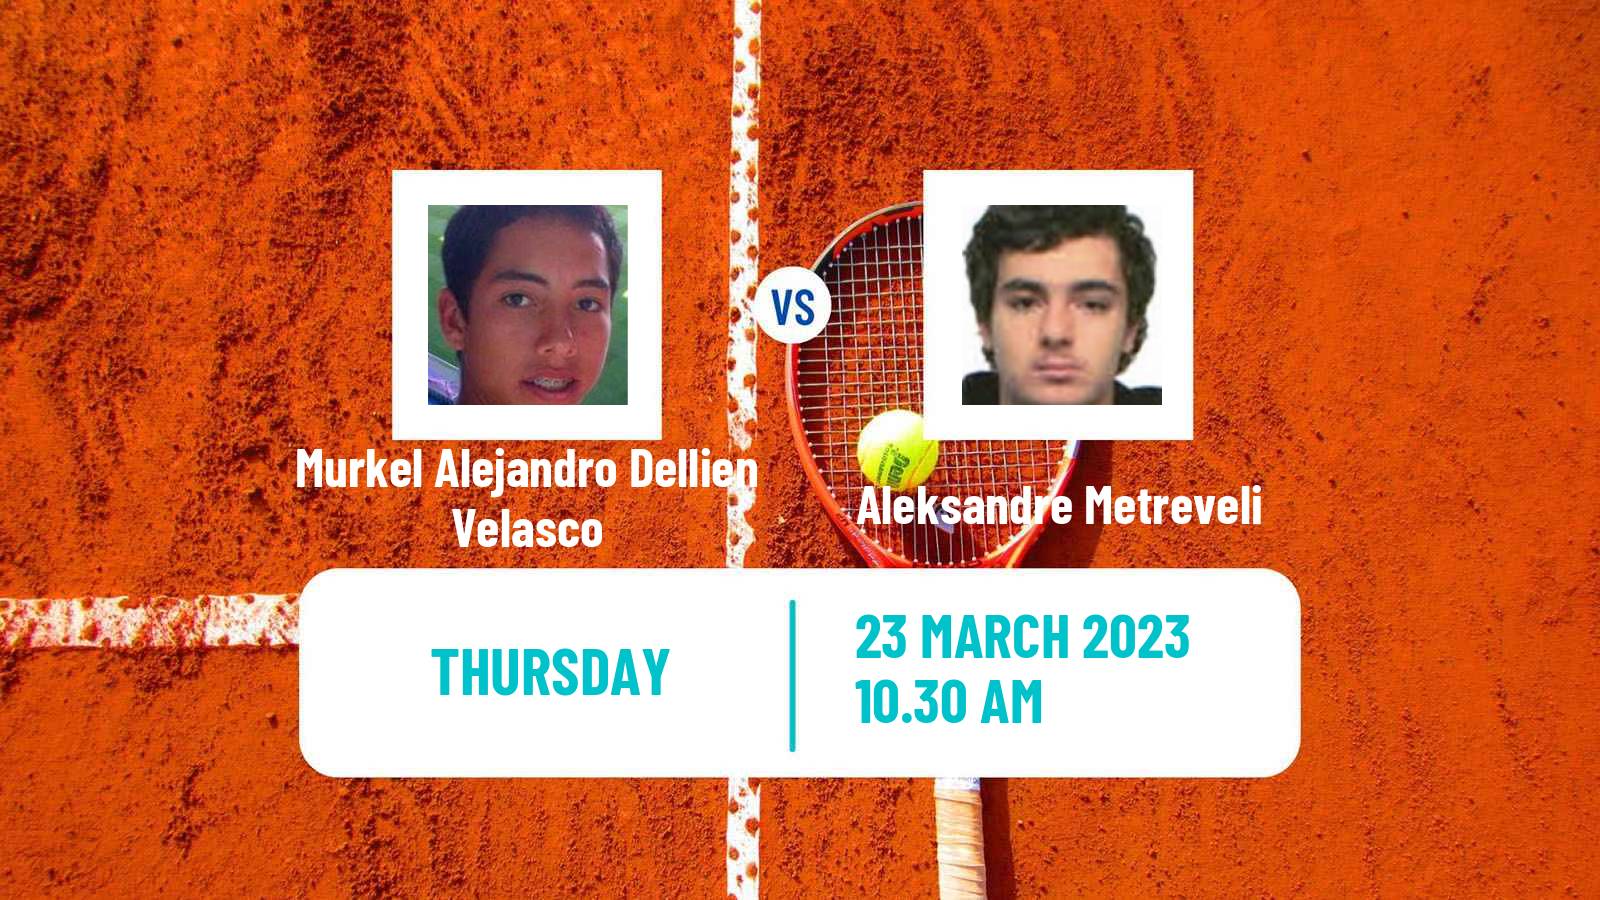 Tennis ITF Tournaments Murkel Alejandro Dellien Velasco - Aleksandre Metreveli